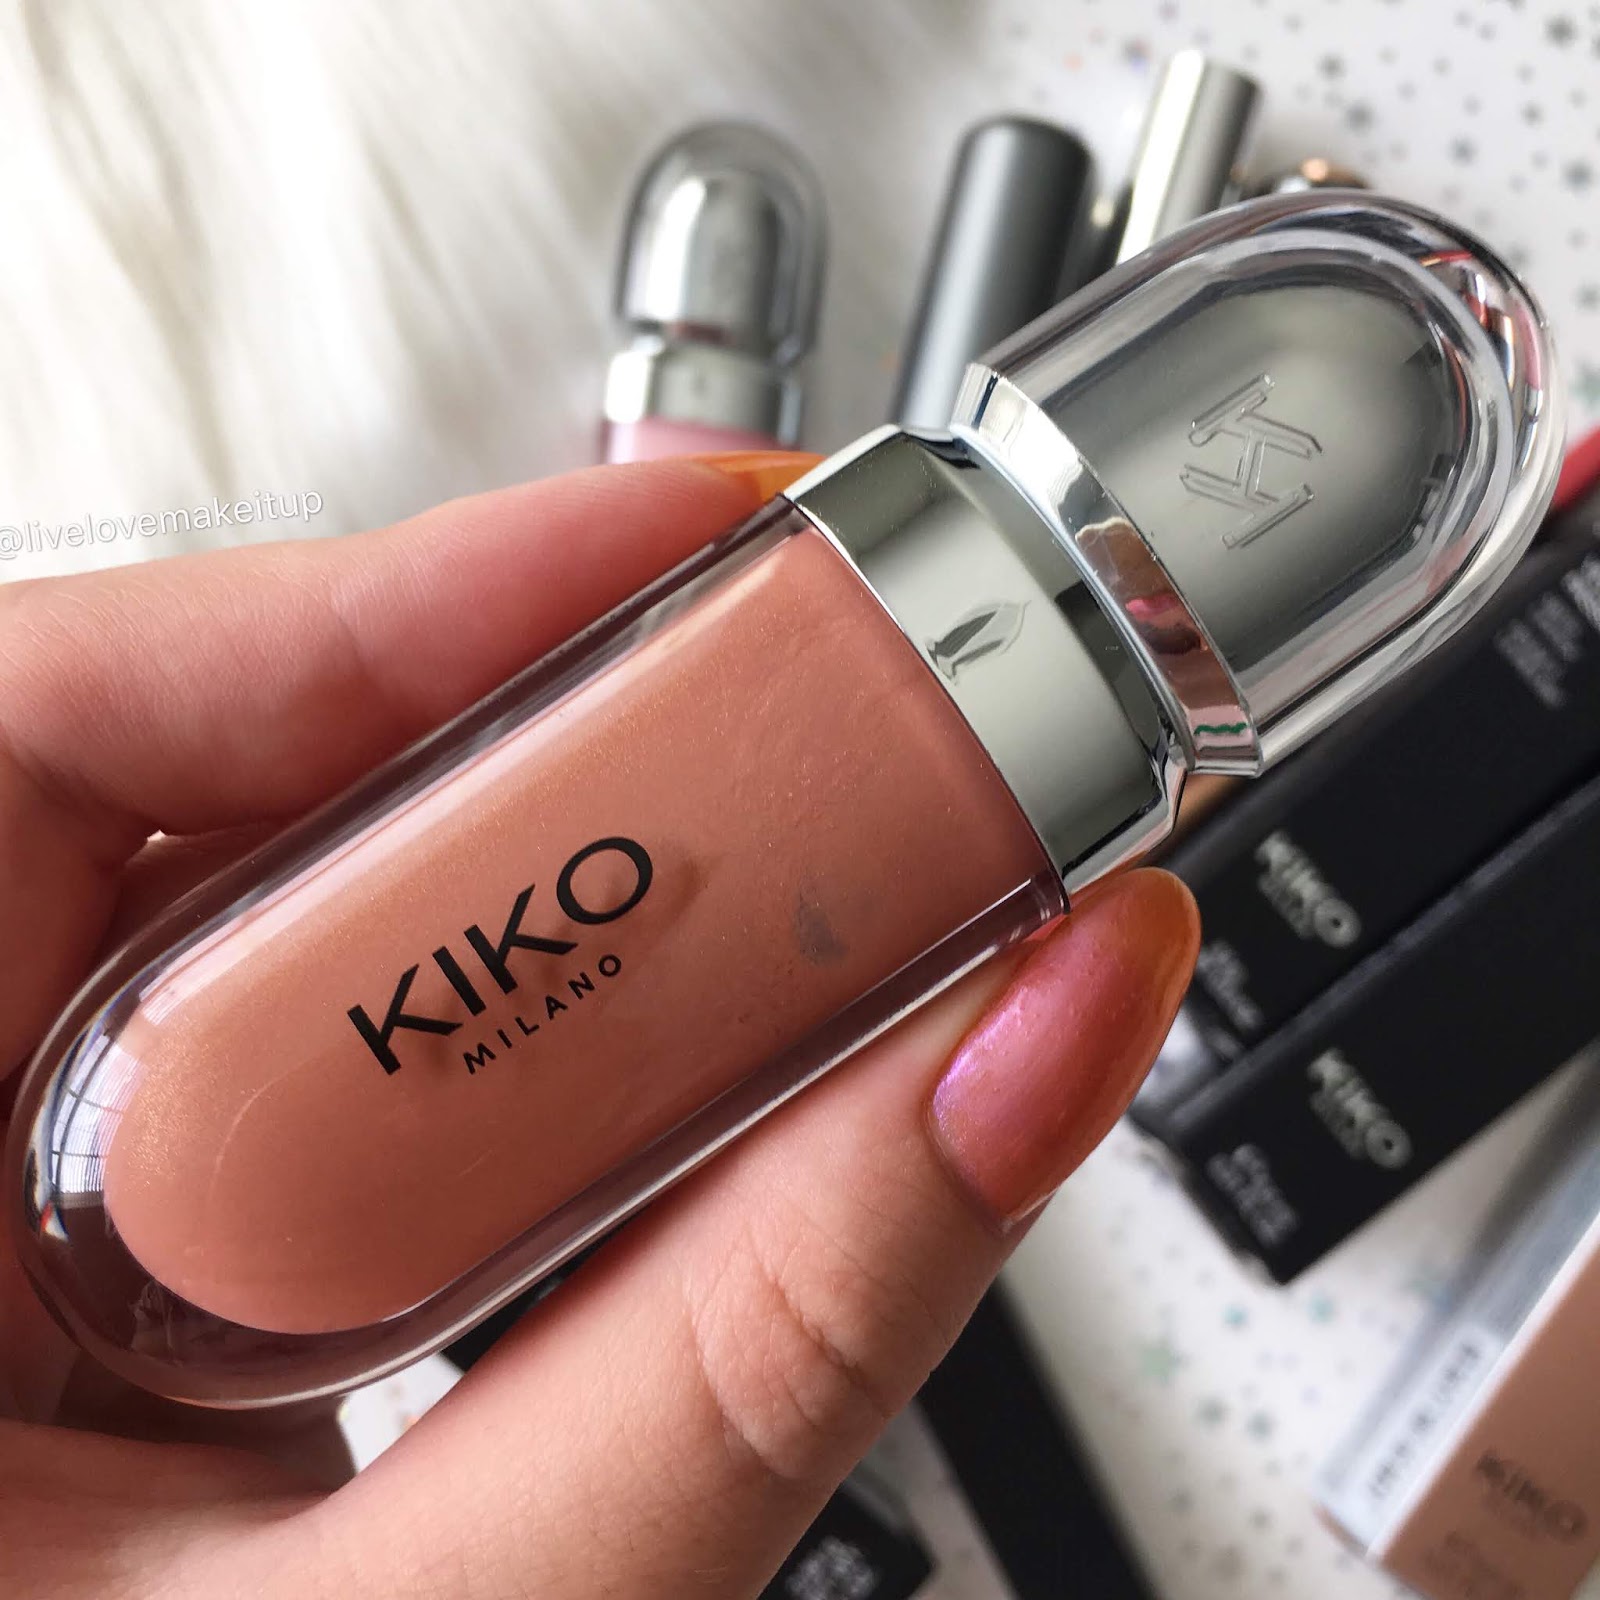 How To Glow: Kiko Milano Haul: Lip Products + Swatches!